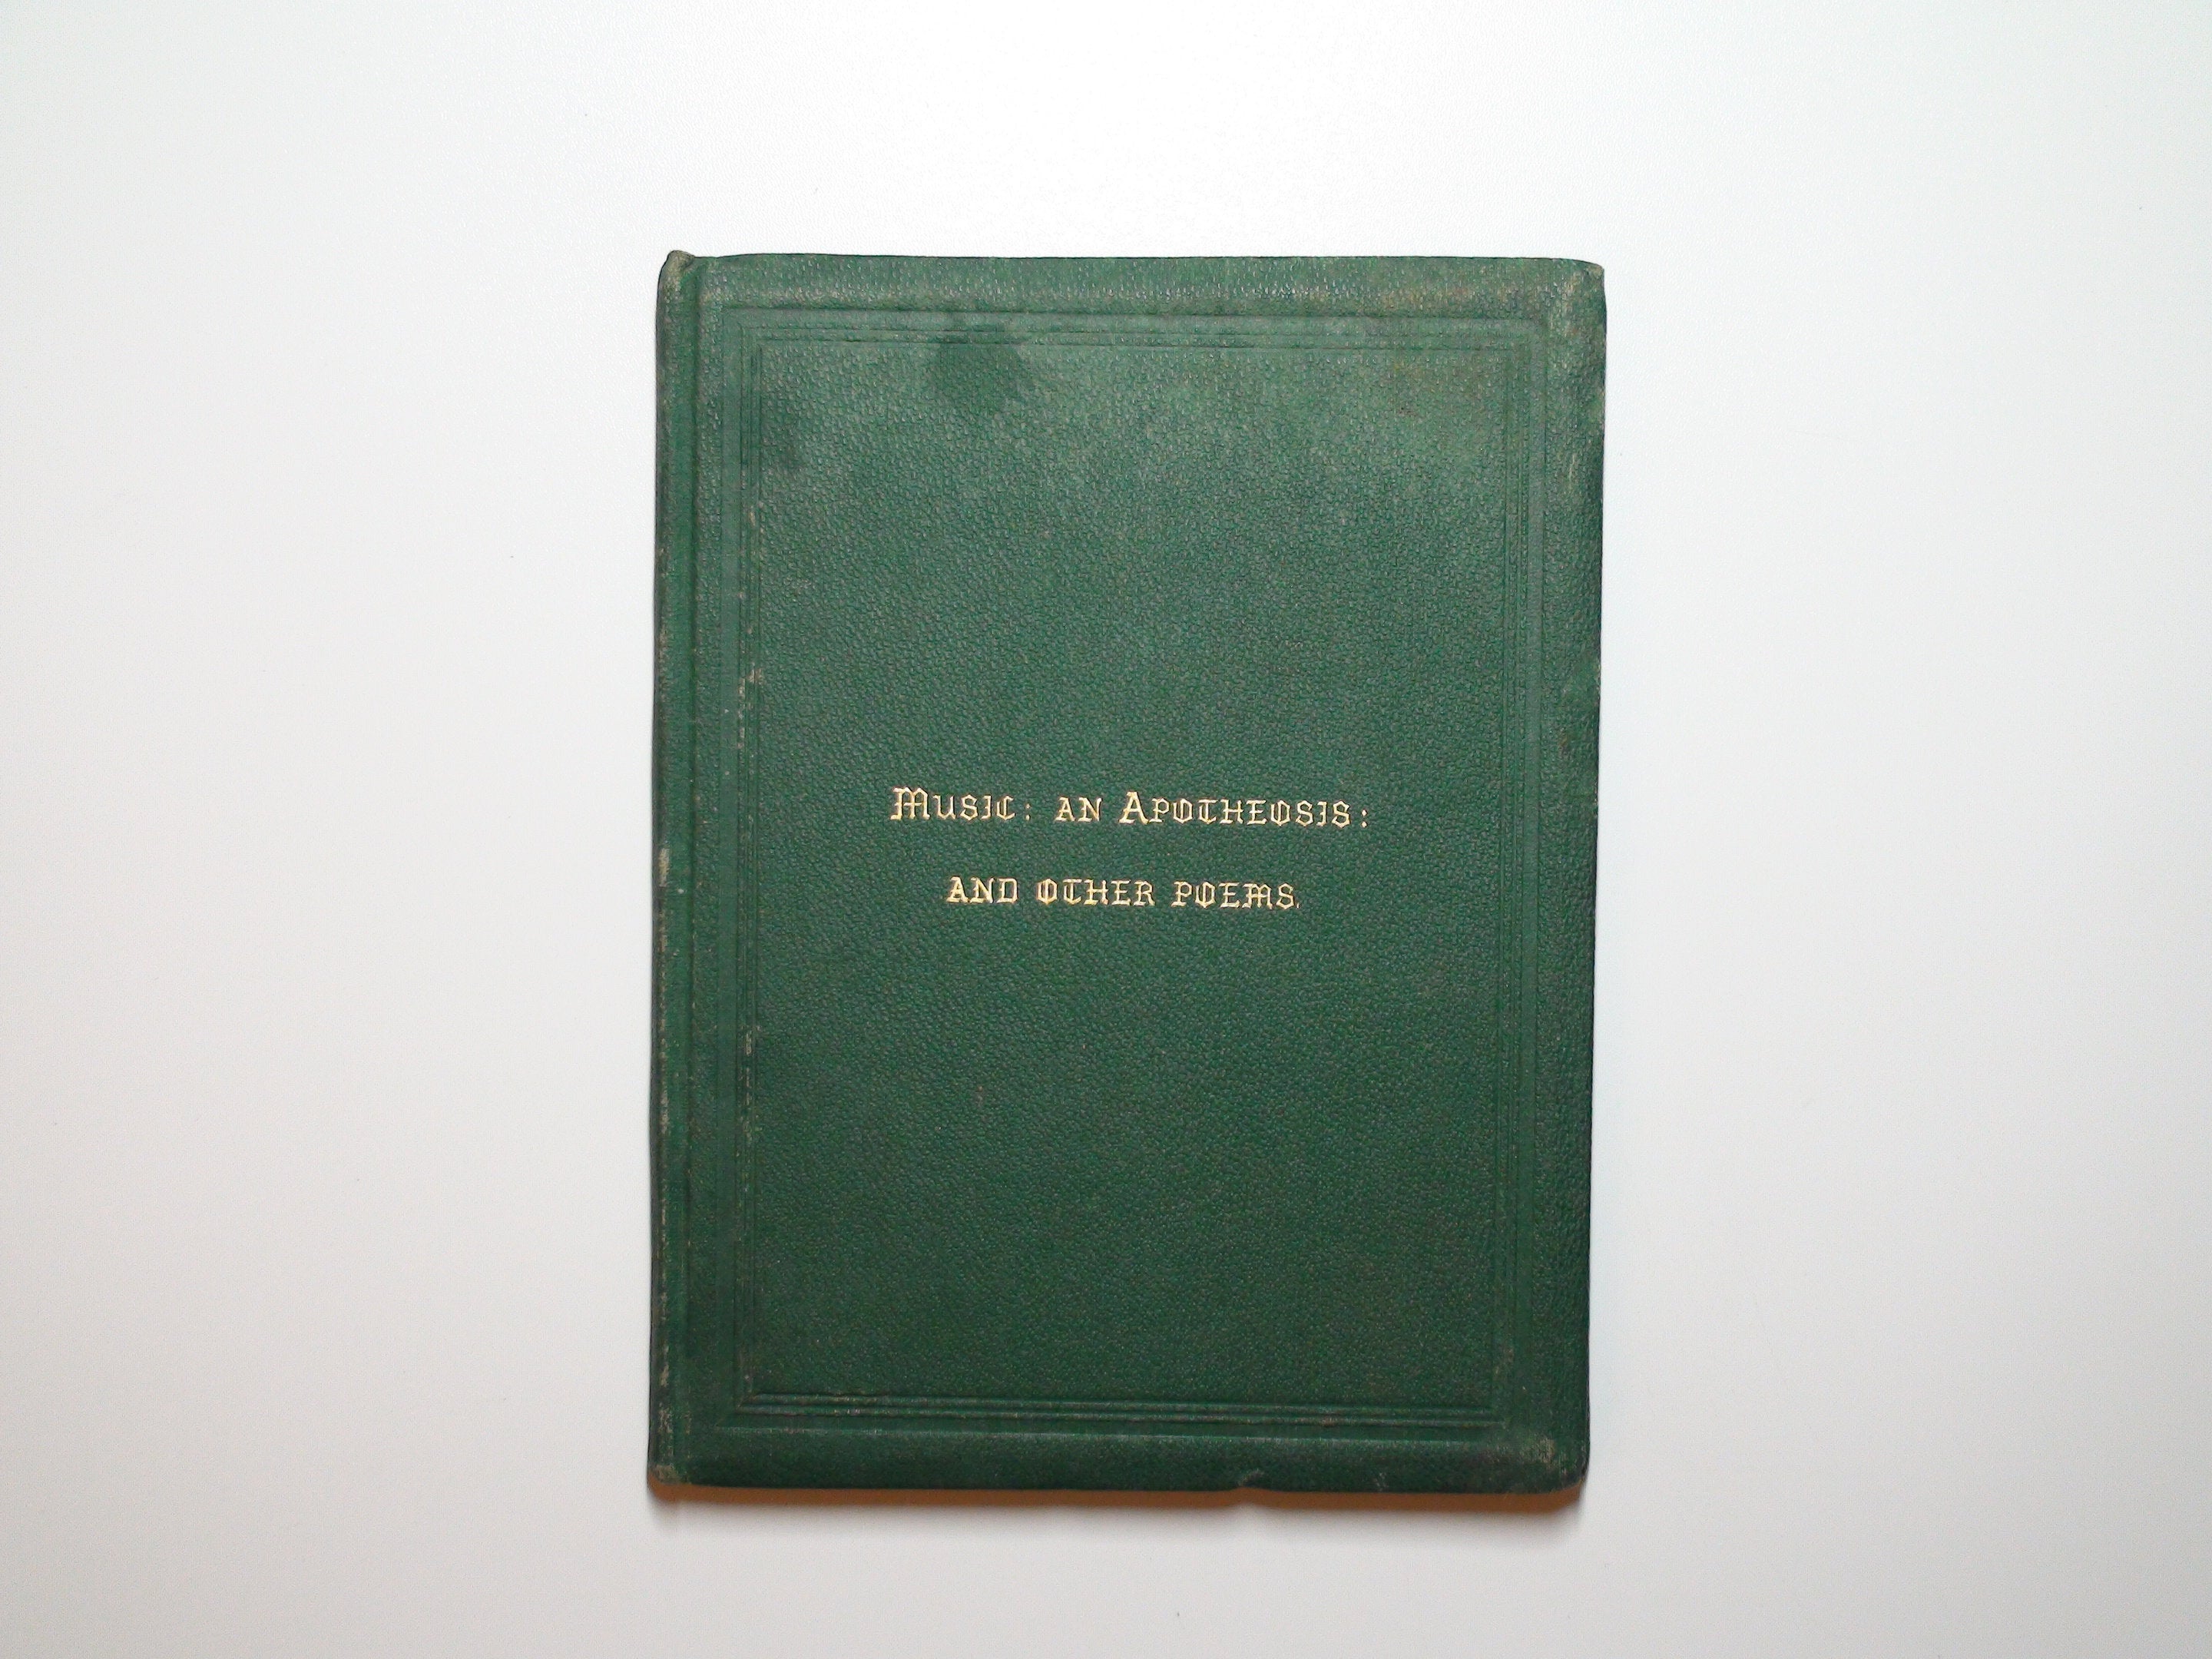 Music: An Apotheosis and Other Poems, Catharine A. Van Buren Adams, 1871, RARE